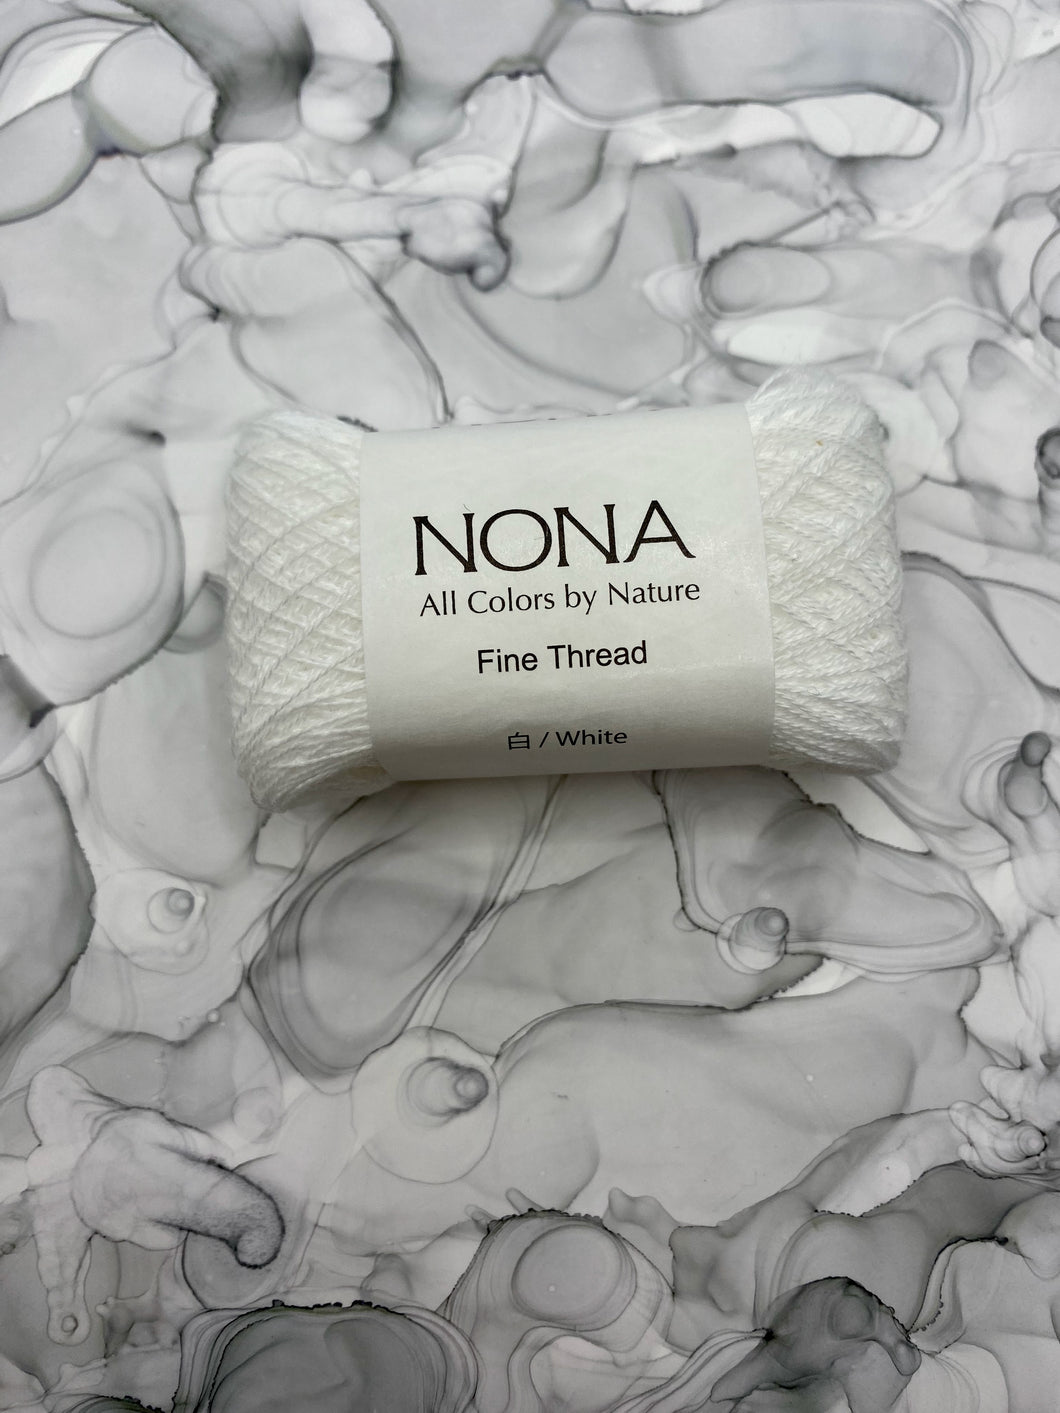 Nona Naturally Dyed Thread - Whites and Off-Whites